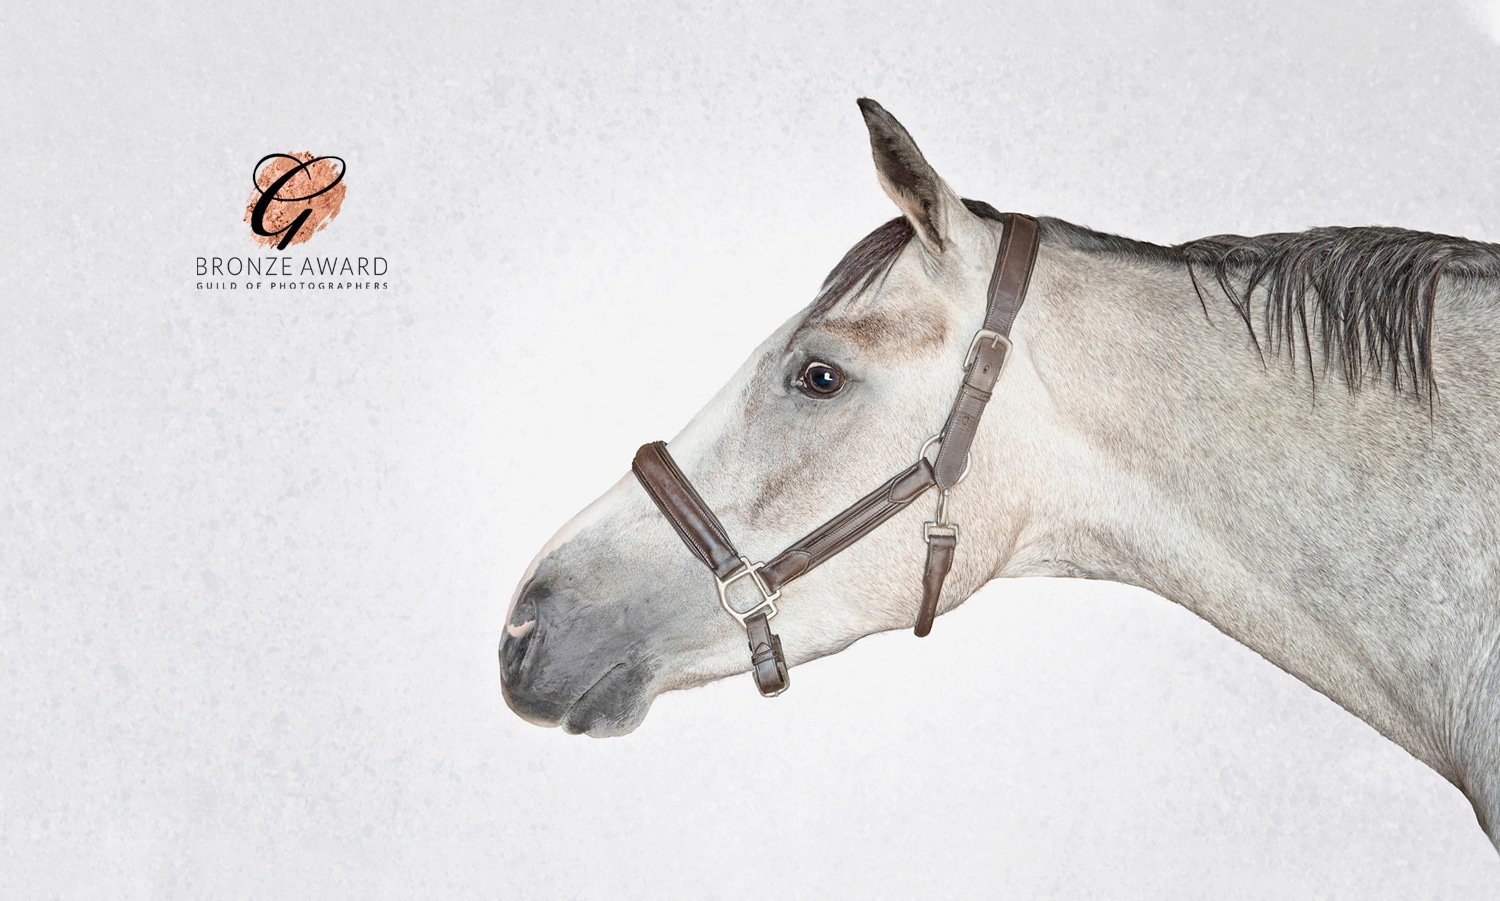 Fine-art equestrian photographs